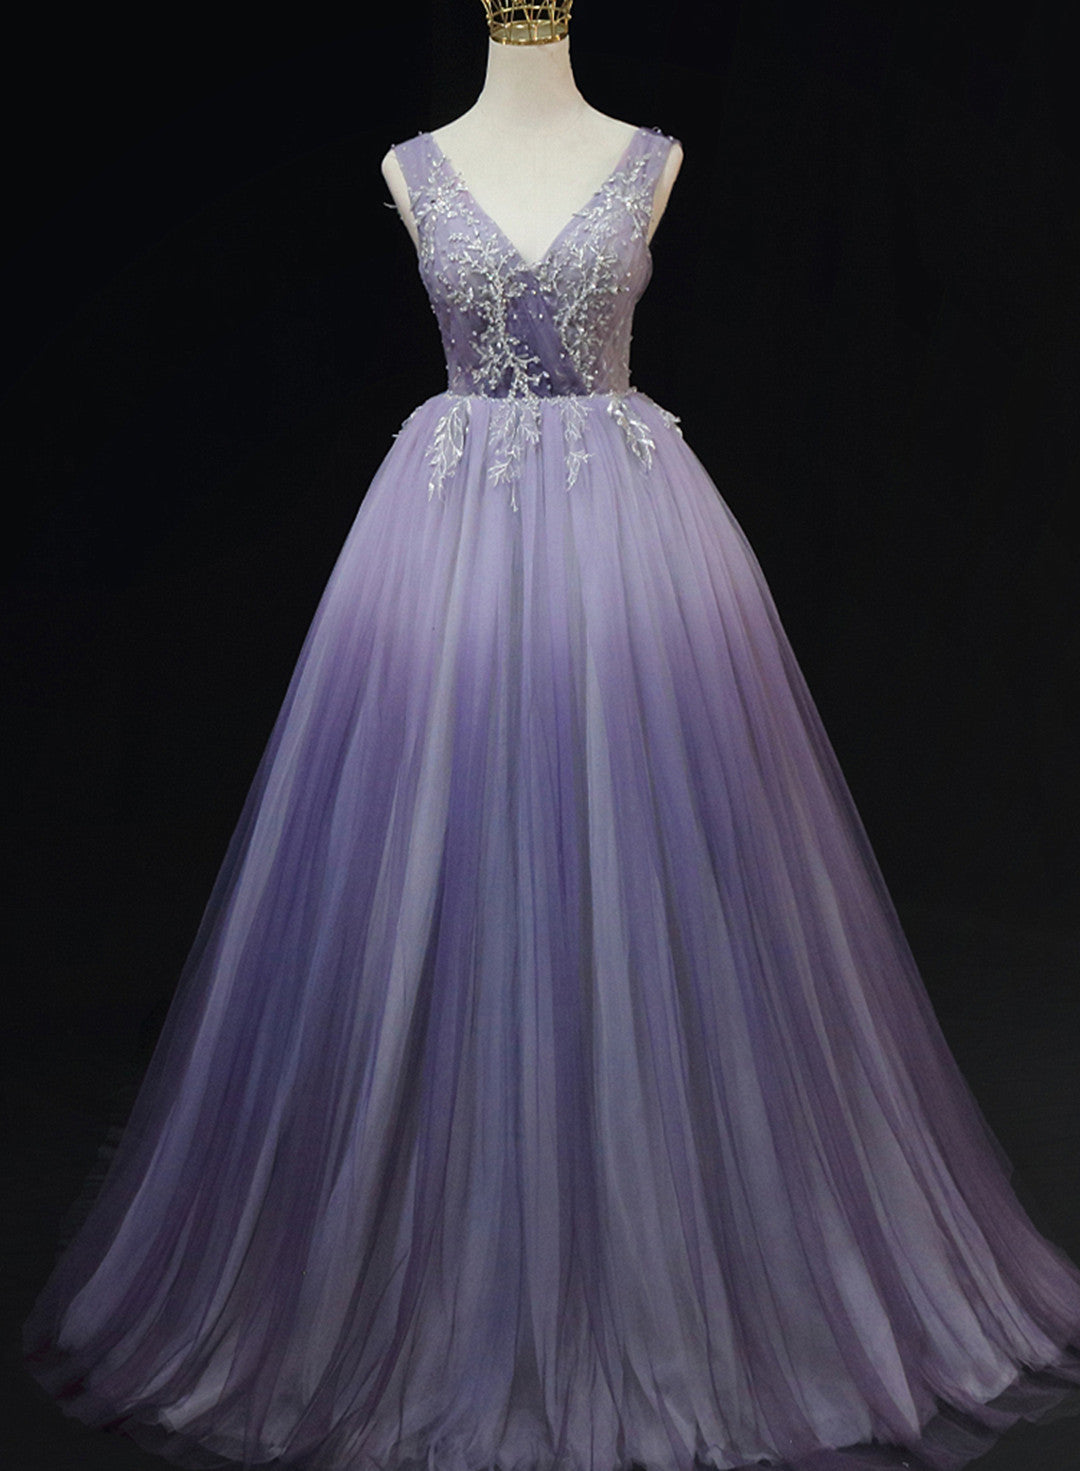 Formal Dress Attire For Wedding, Light Purple Tulle Gradient Lace Applique Formal Dress, Long Prom Dress